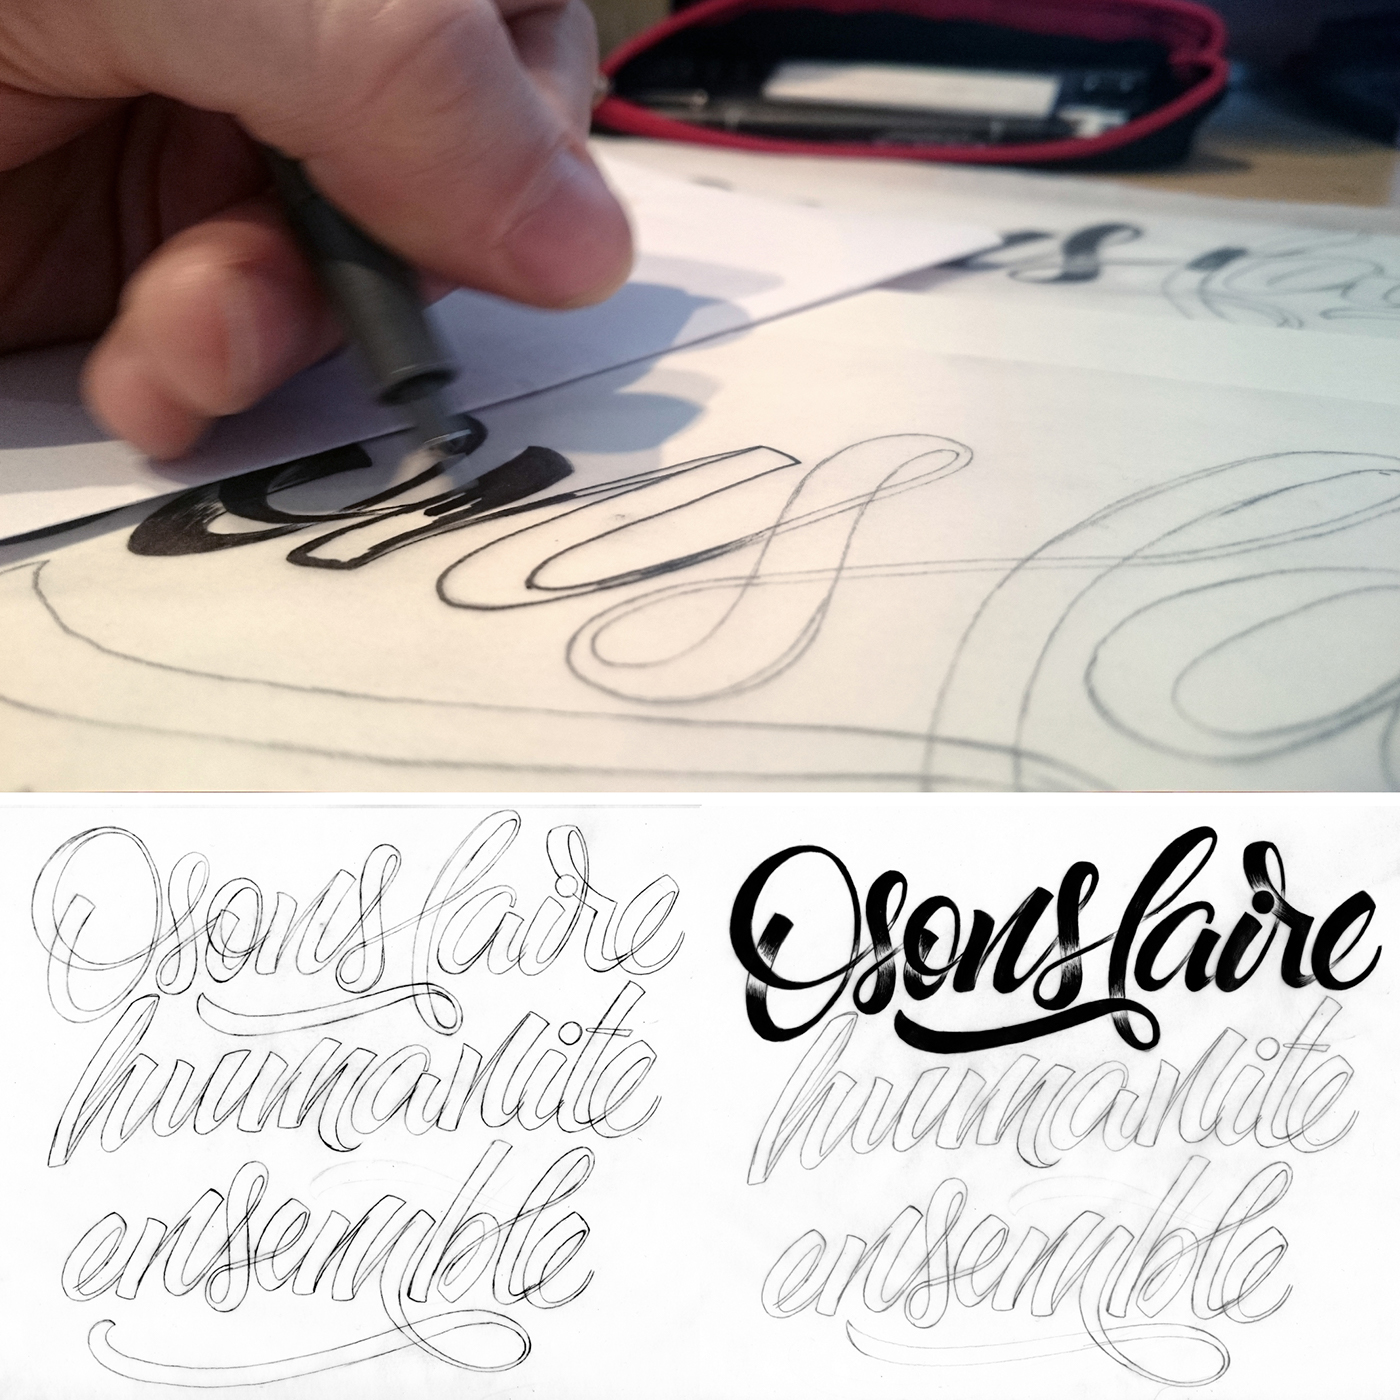 #Design #lettering #handtype #Branding #Vector #illustration #graphisme #paris #graphic #sketch